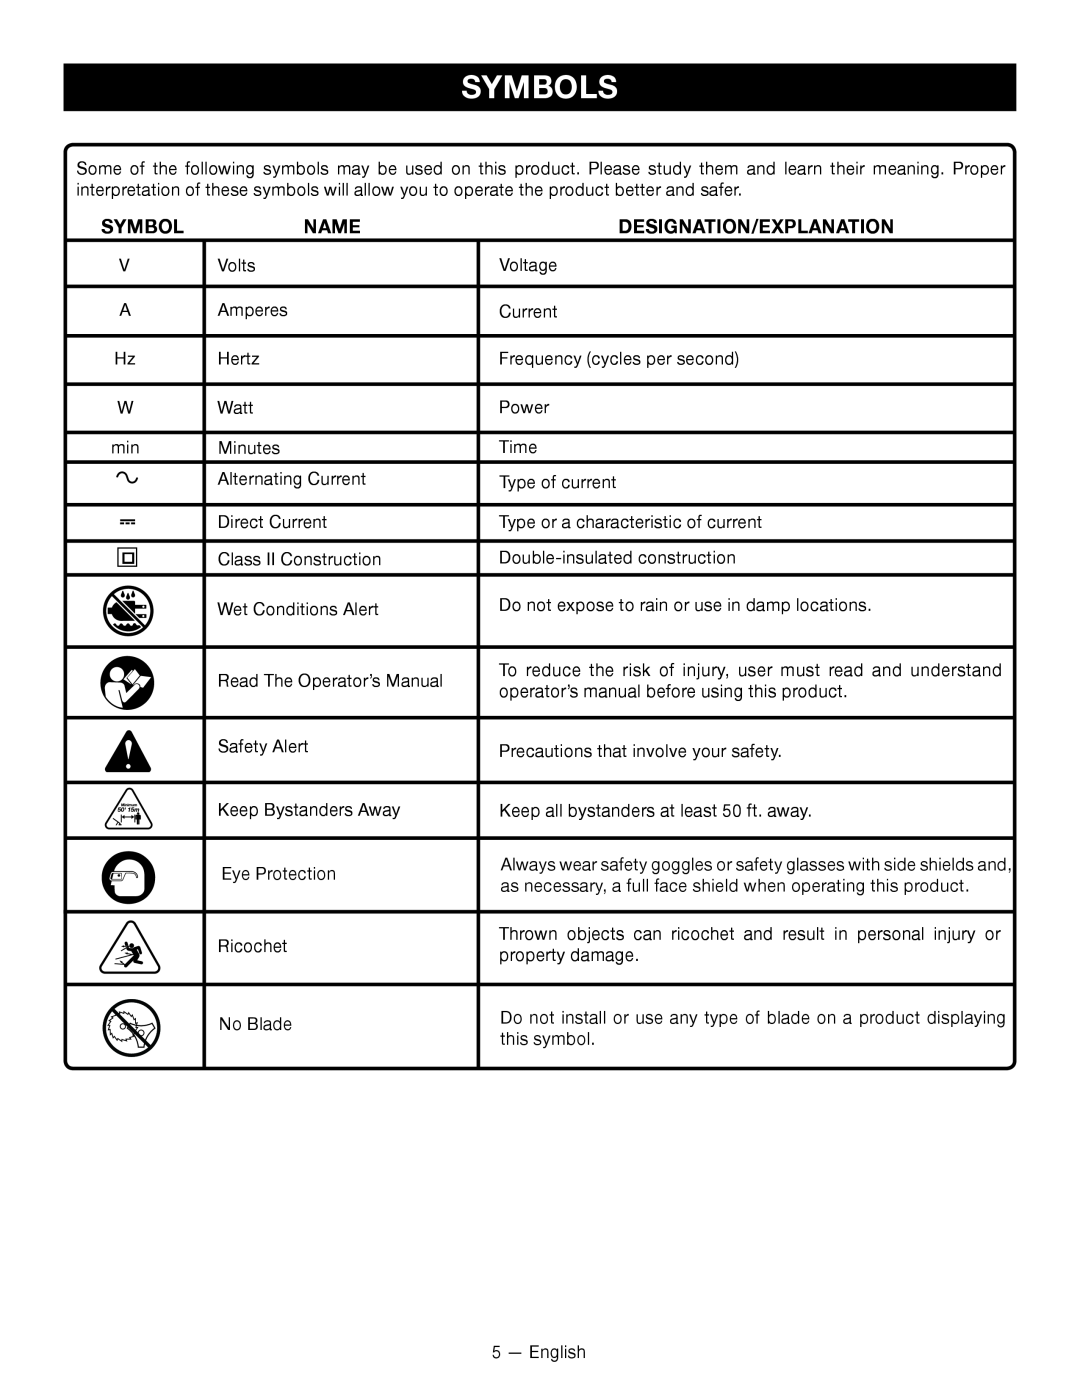 Ryobi P2000 manuel dutilisation Symbols, Name, Designation/Explanation 